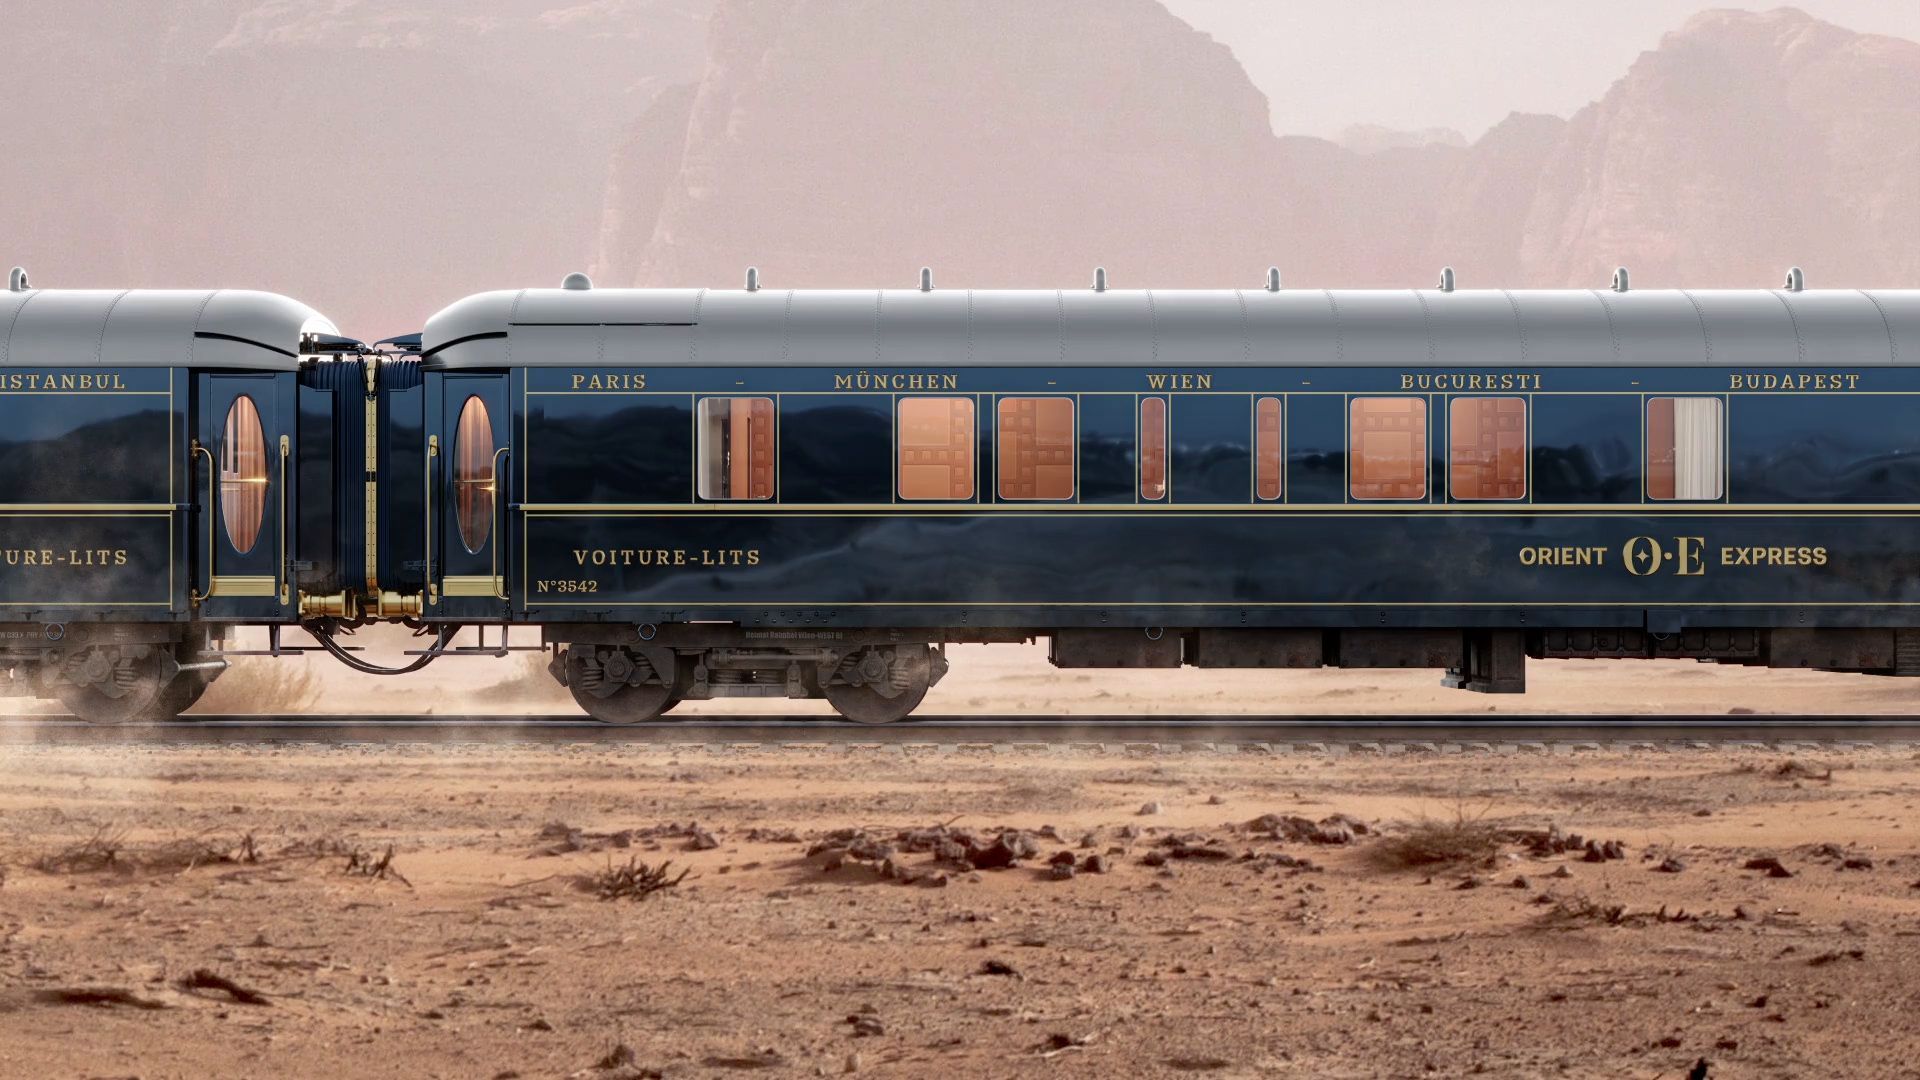 When rail travel still had style: Orient Express shines in new splendor